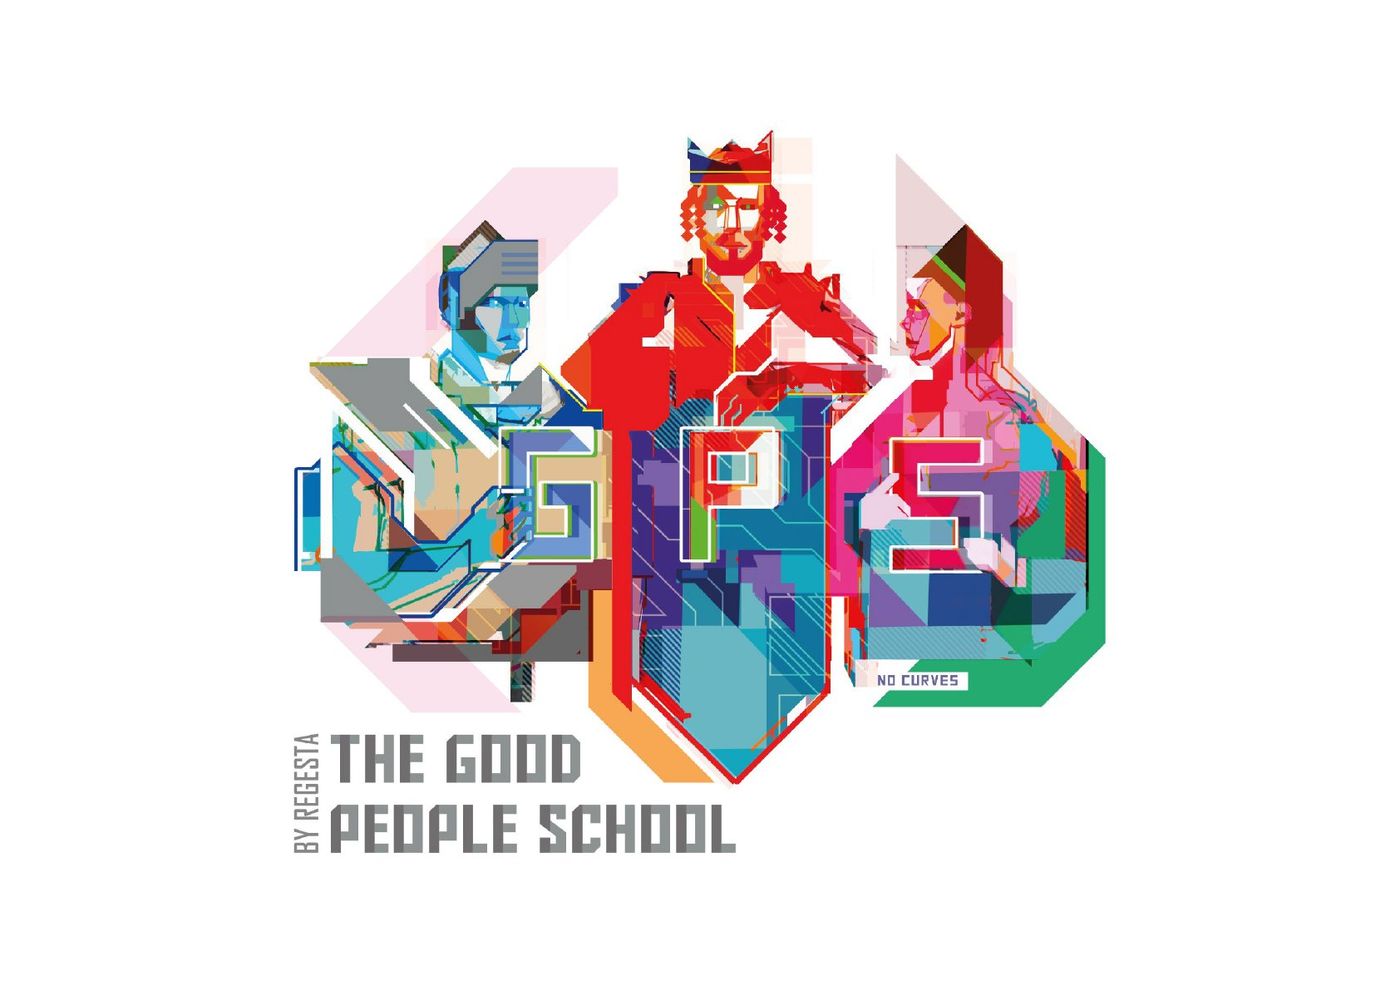 The good people school